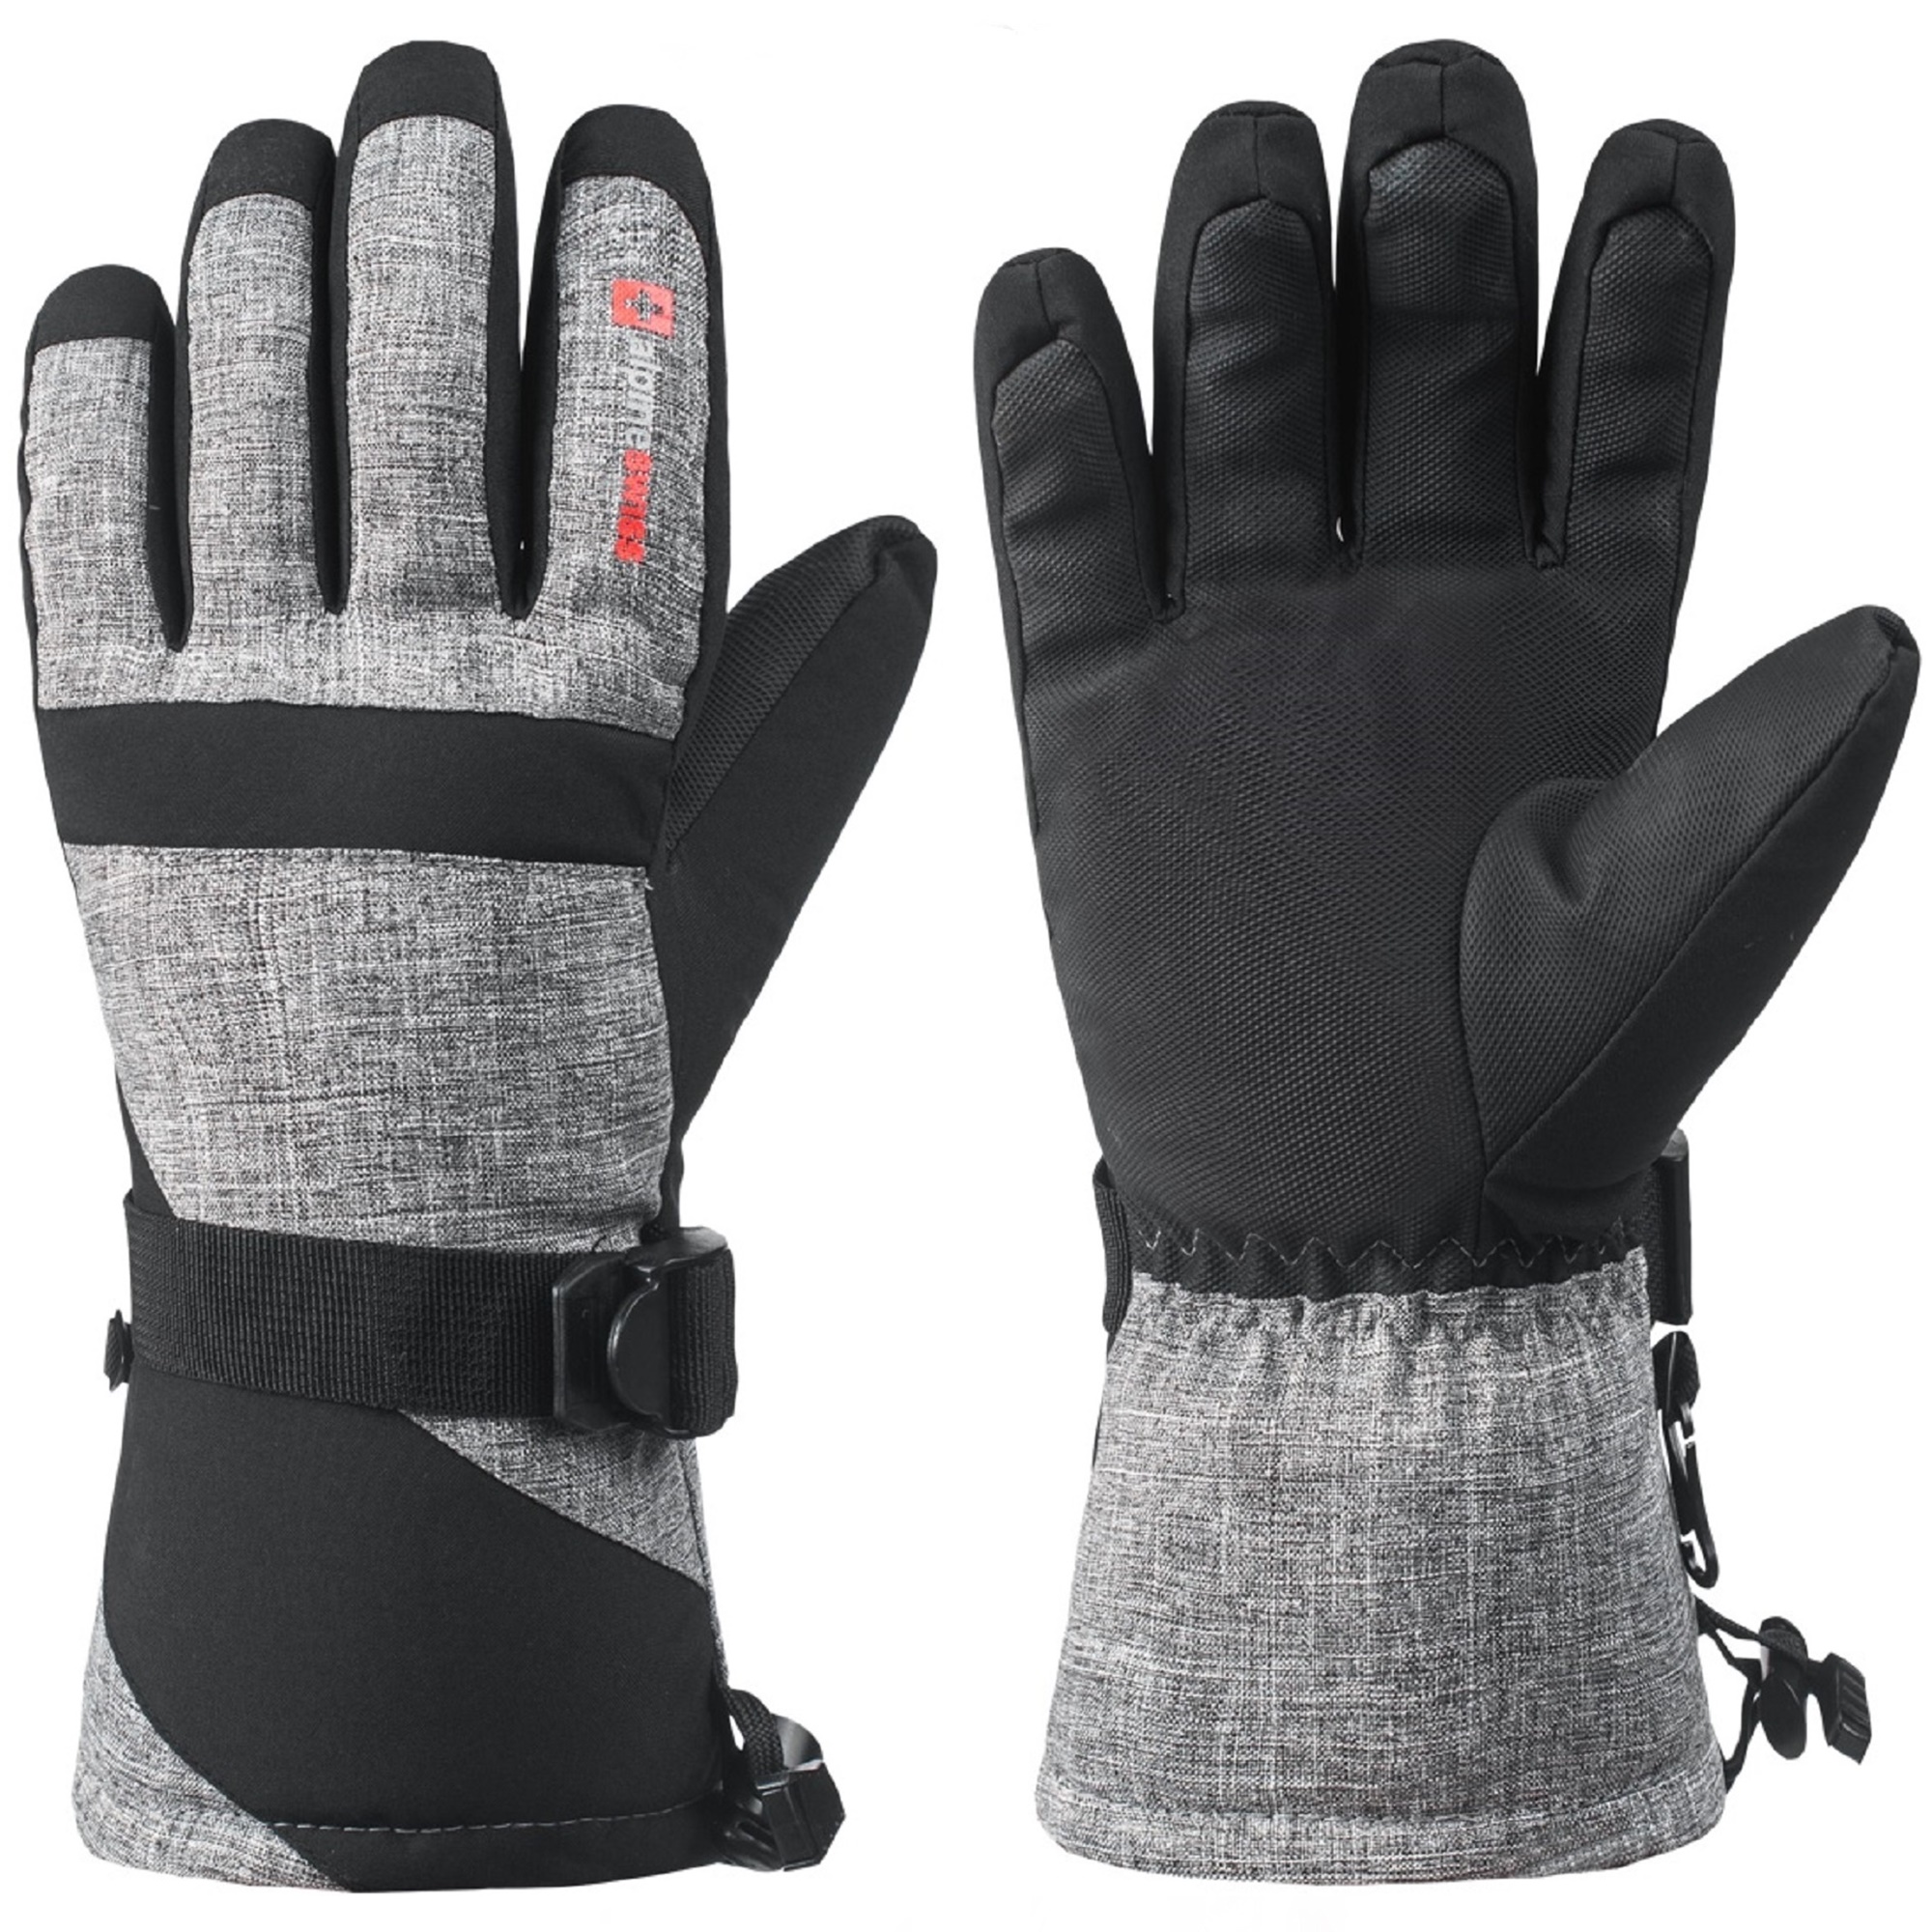 double layer ski gloves